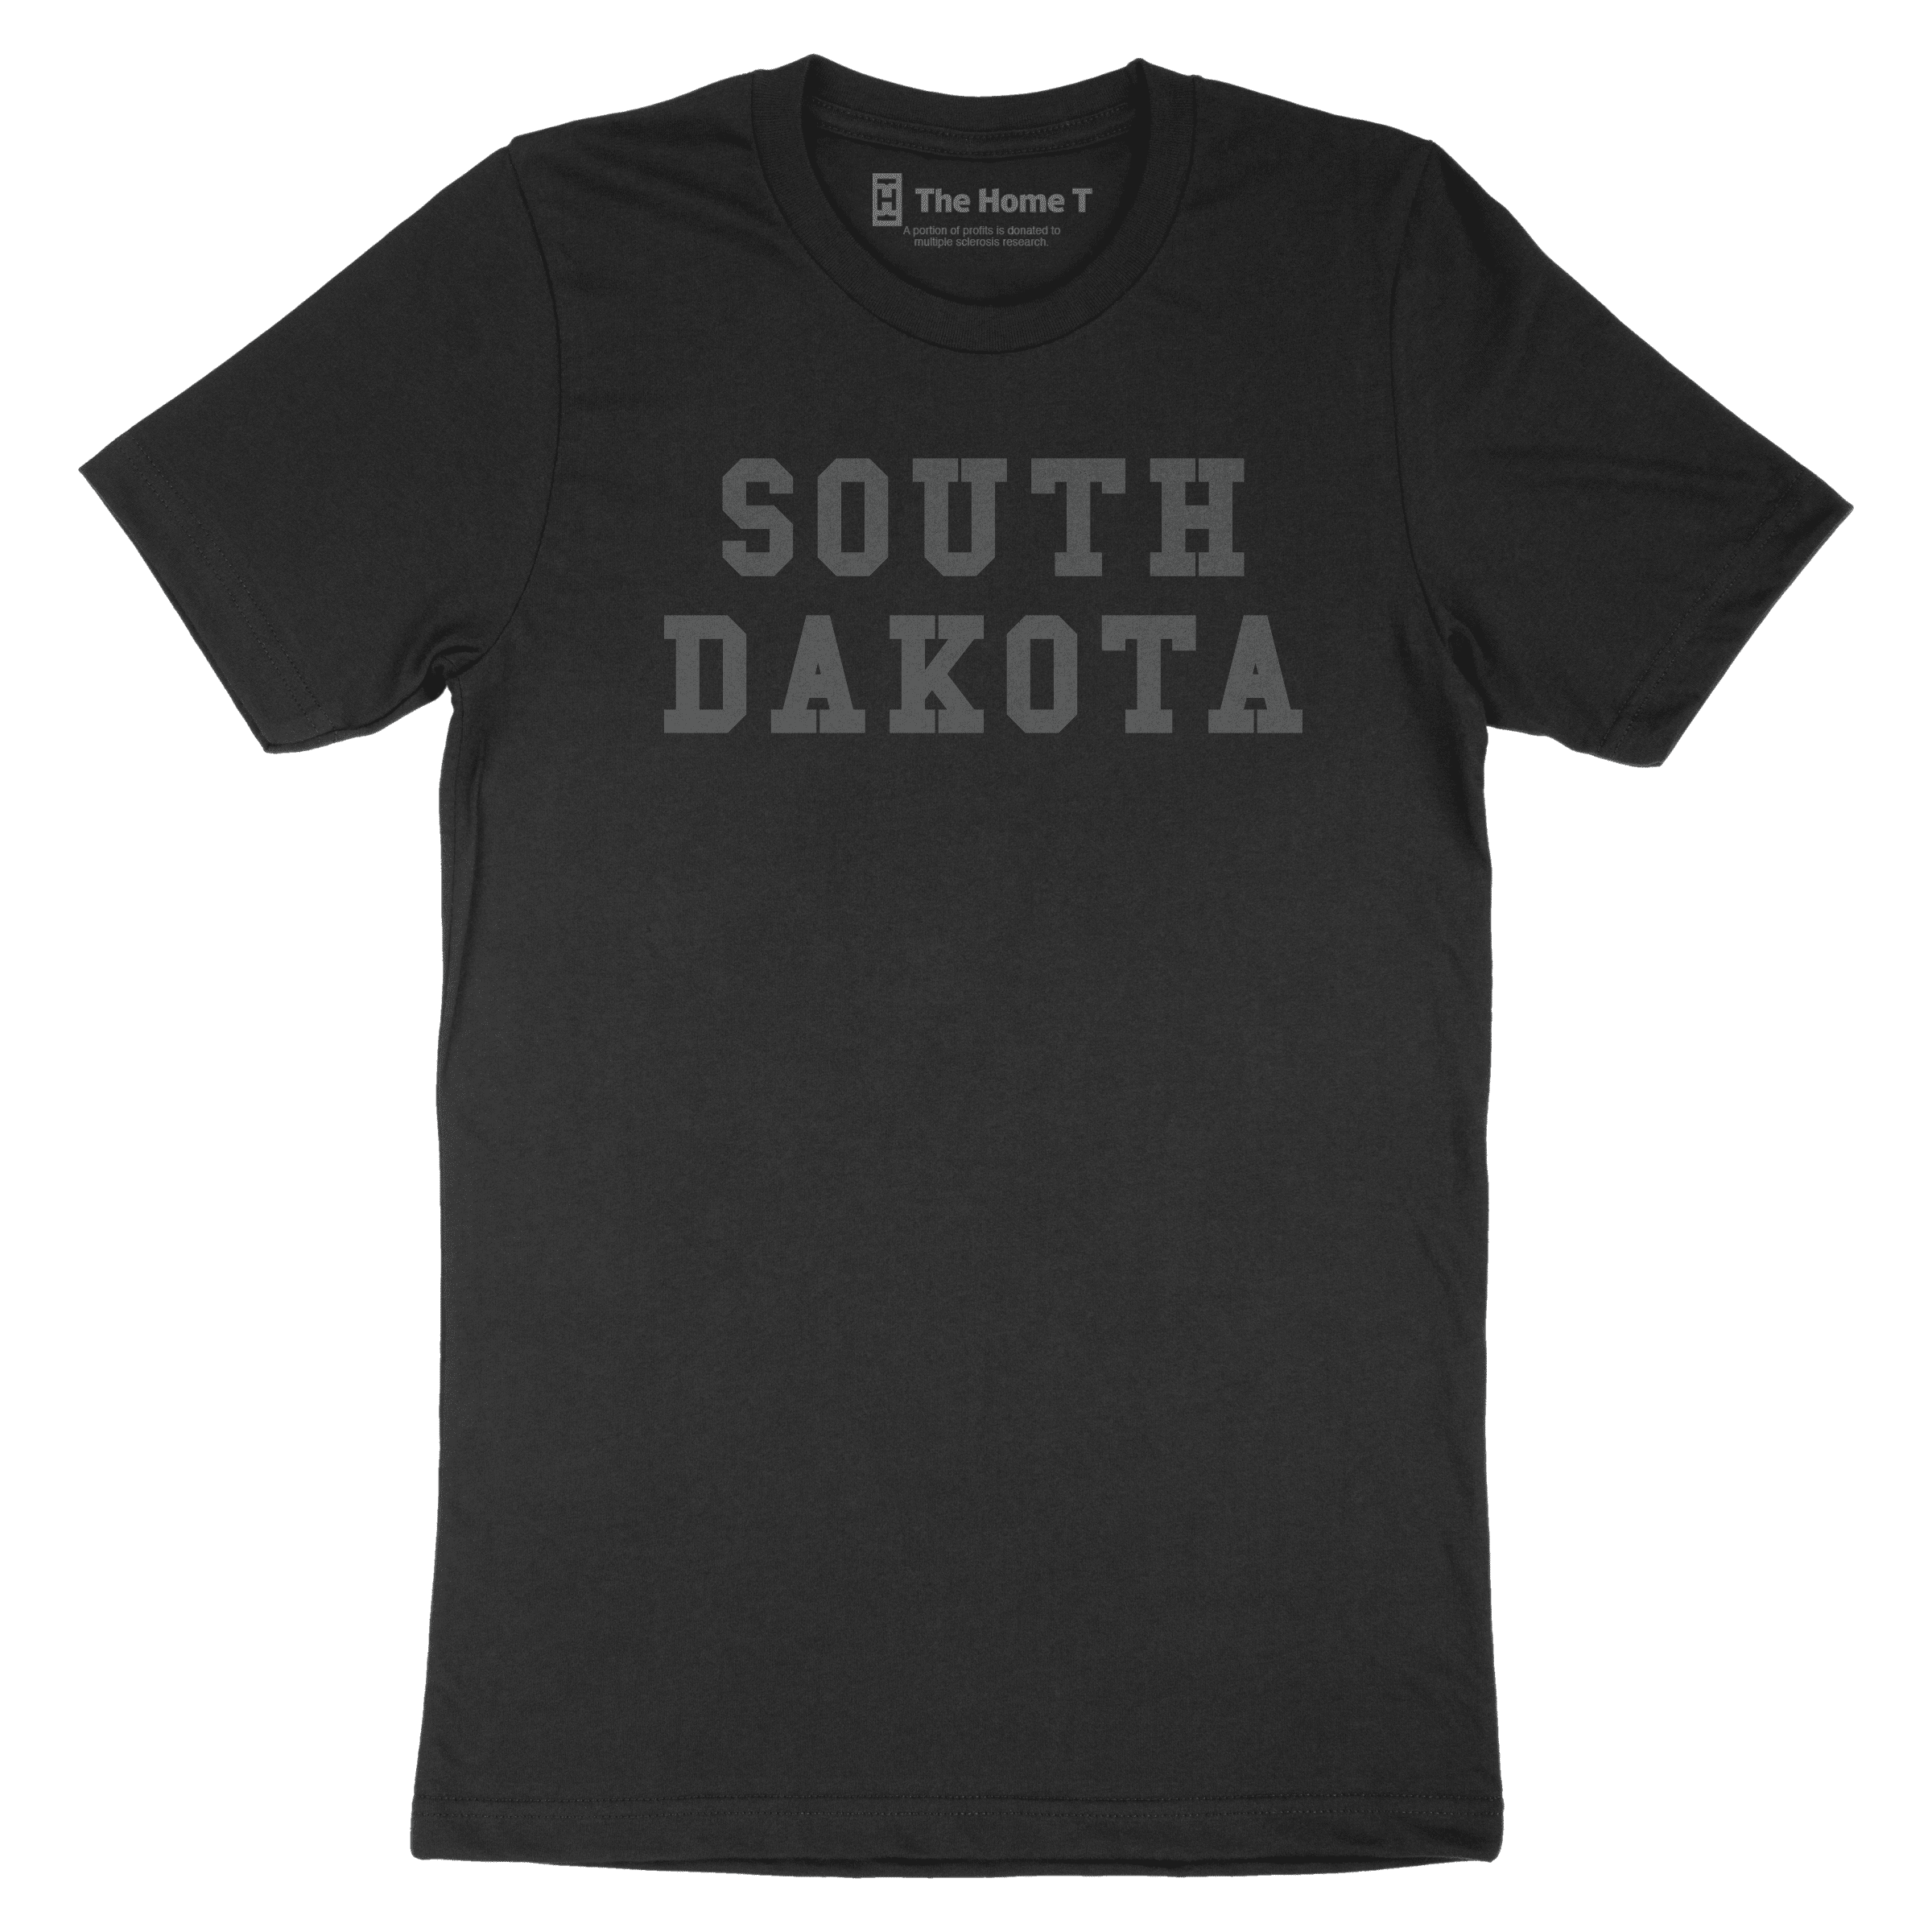 South Dakota Black on Black